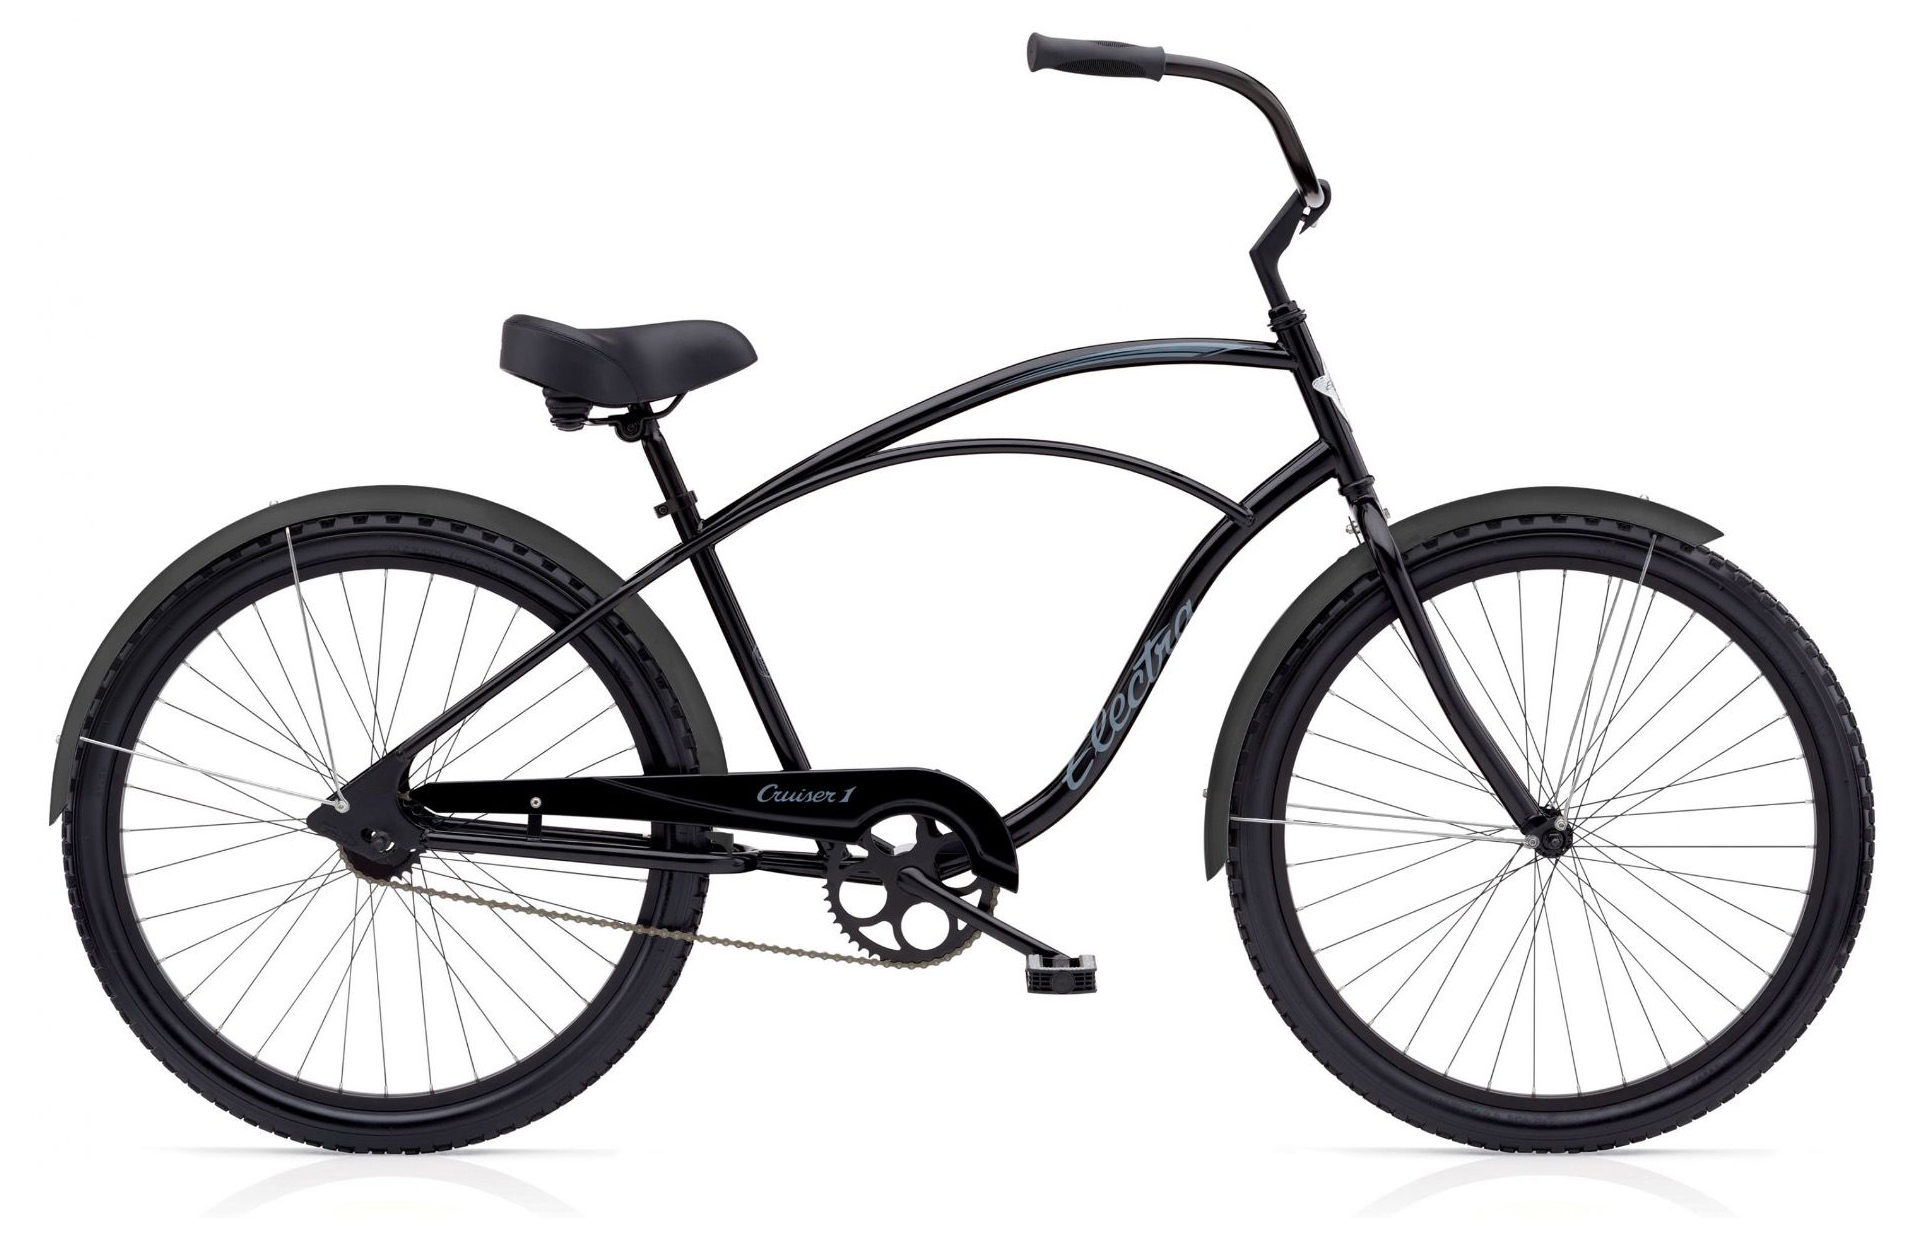  Велосипед Electra Cruiser 1 2019